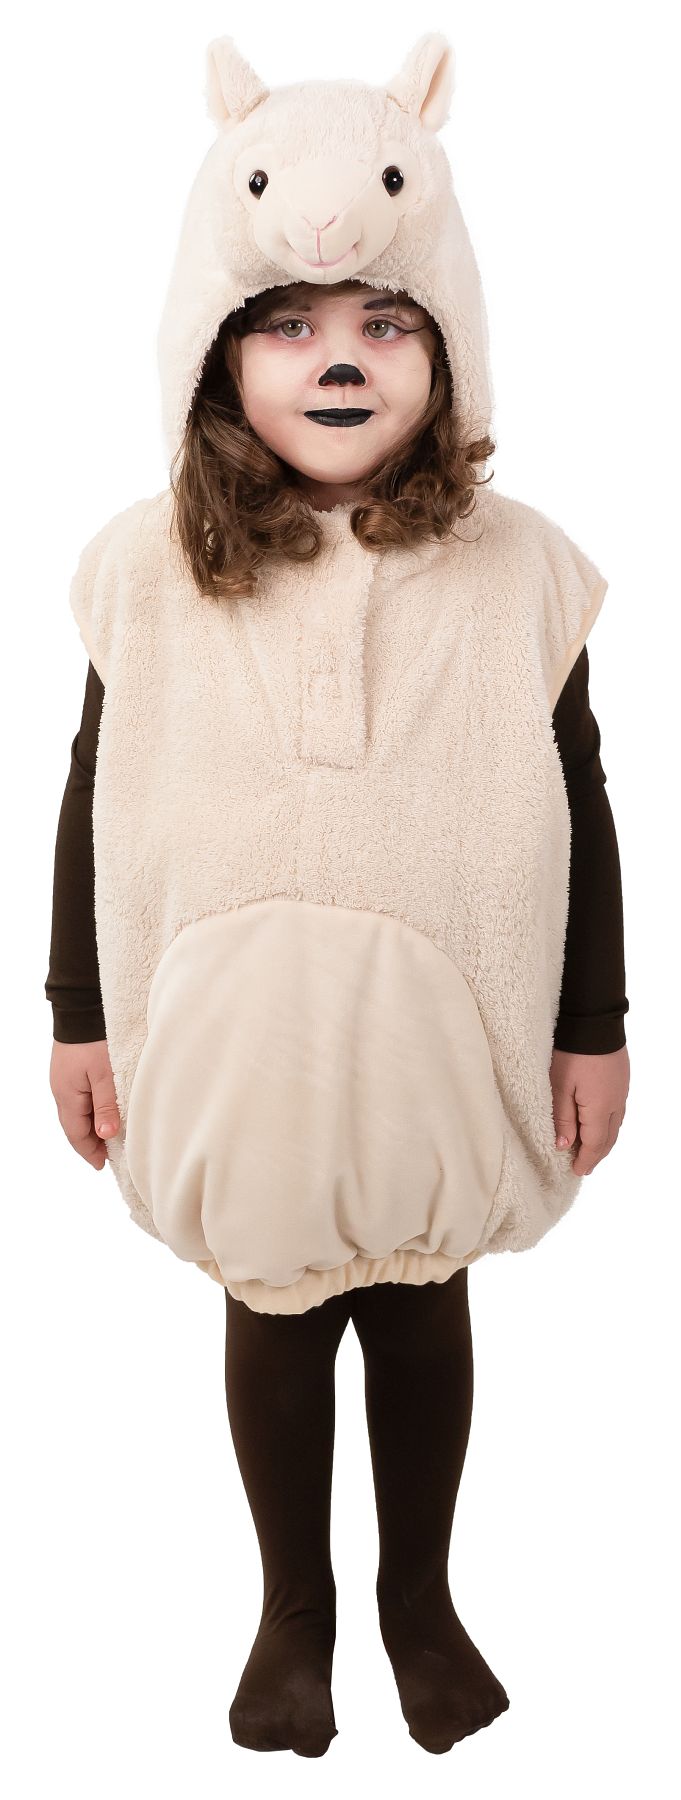 Sheep vest